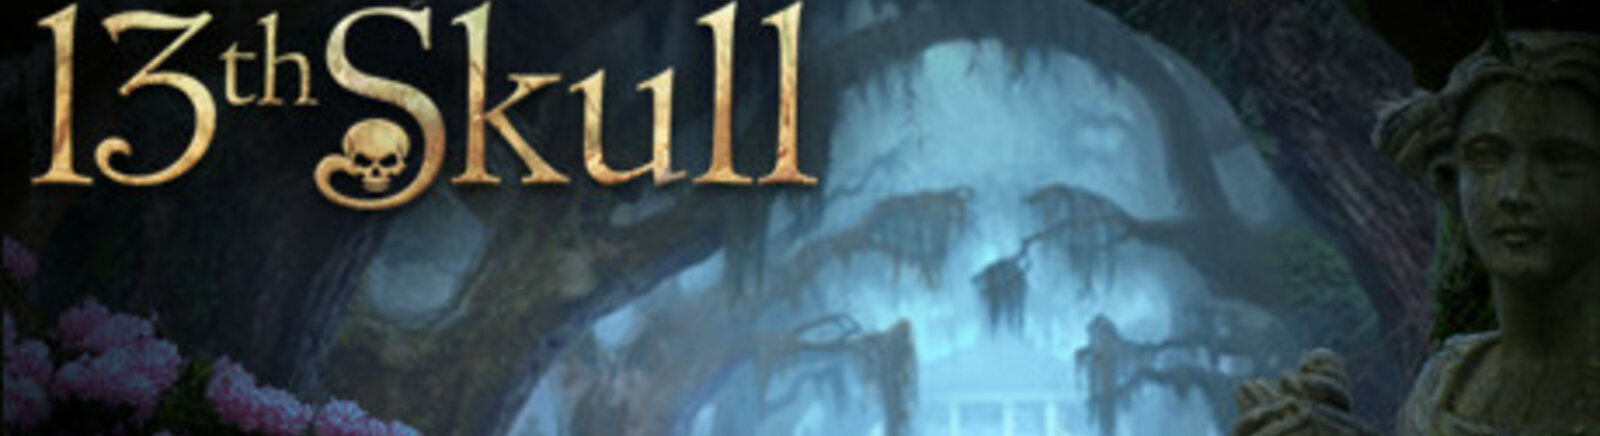 Дата выхода Mystery Case Files: 13th Skull  на PC, Mac и iPad в России и во всем мире